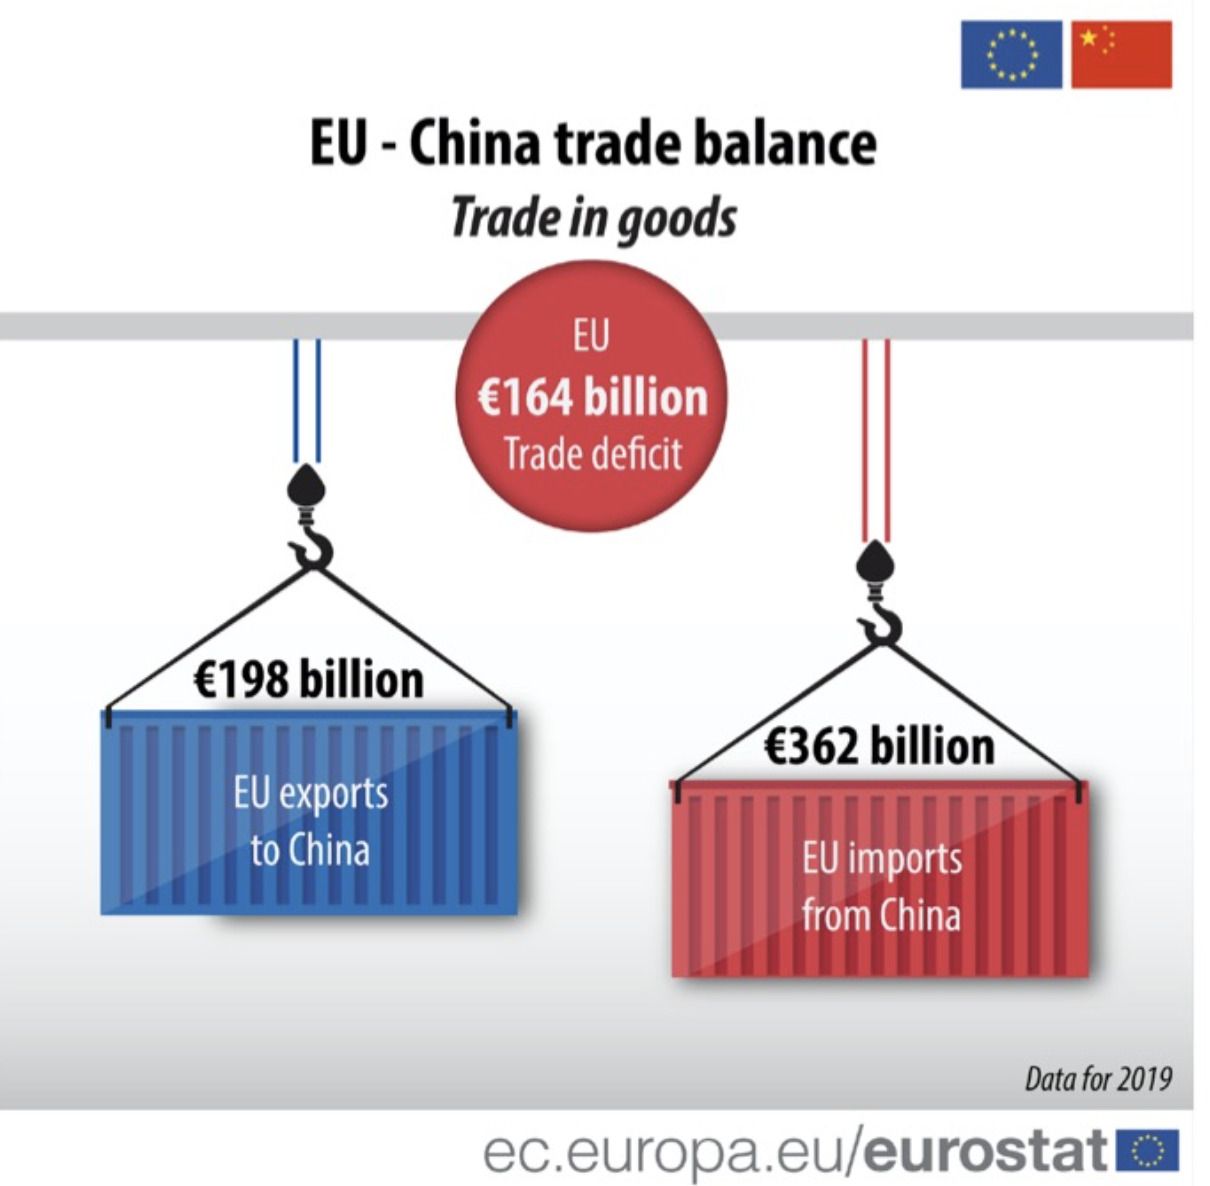 E.U.-China trade balance in goods